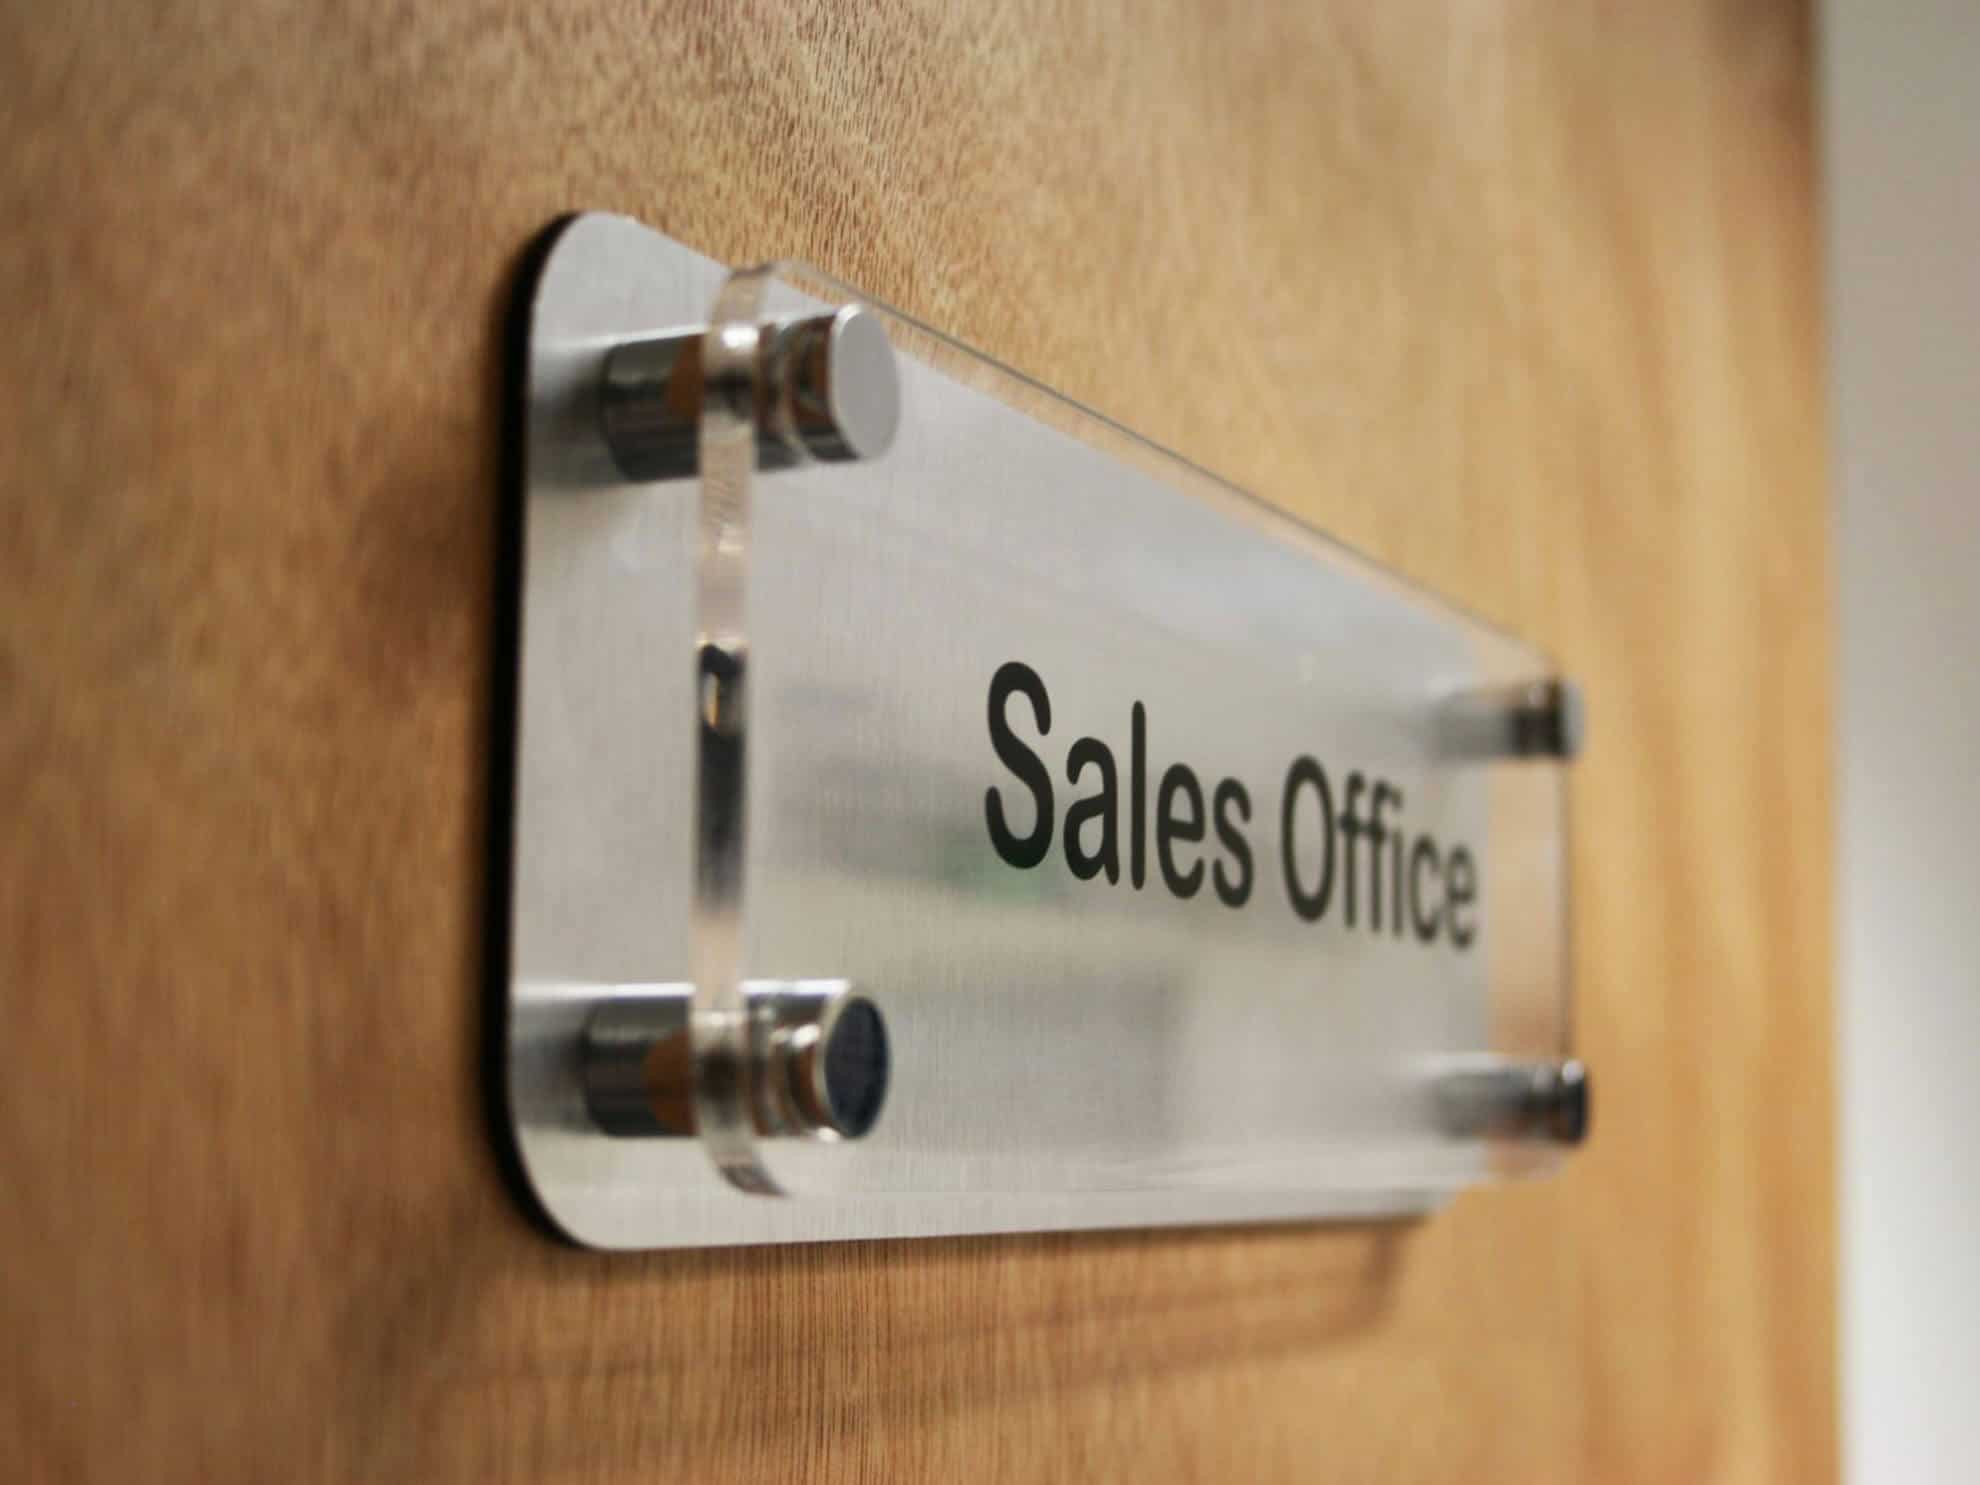 Sales office acrylic interior door sign